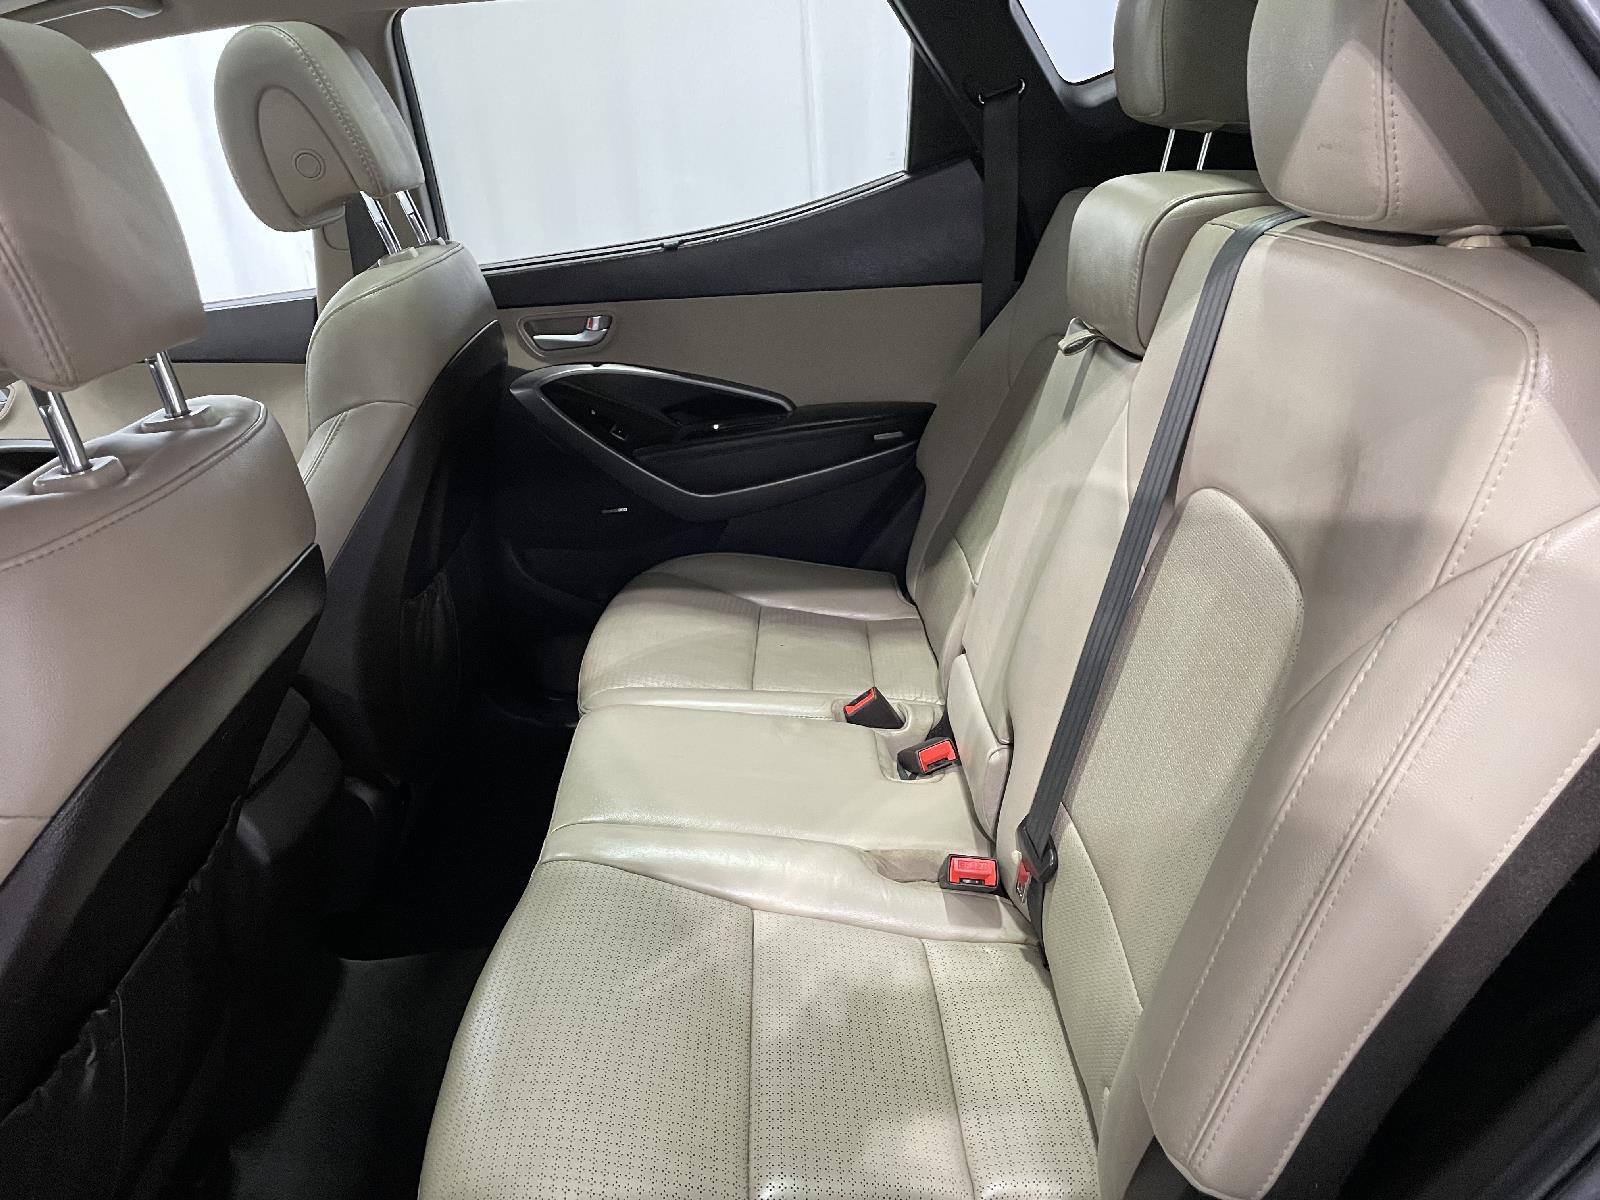 Used 2015 Hyundai Santa Fe Sport  SUV for sale in St Joseph MO